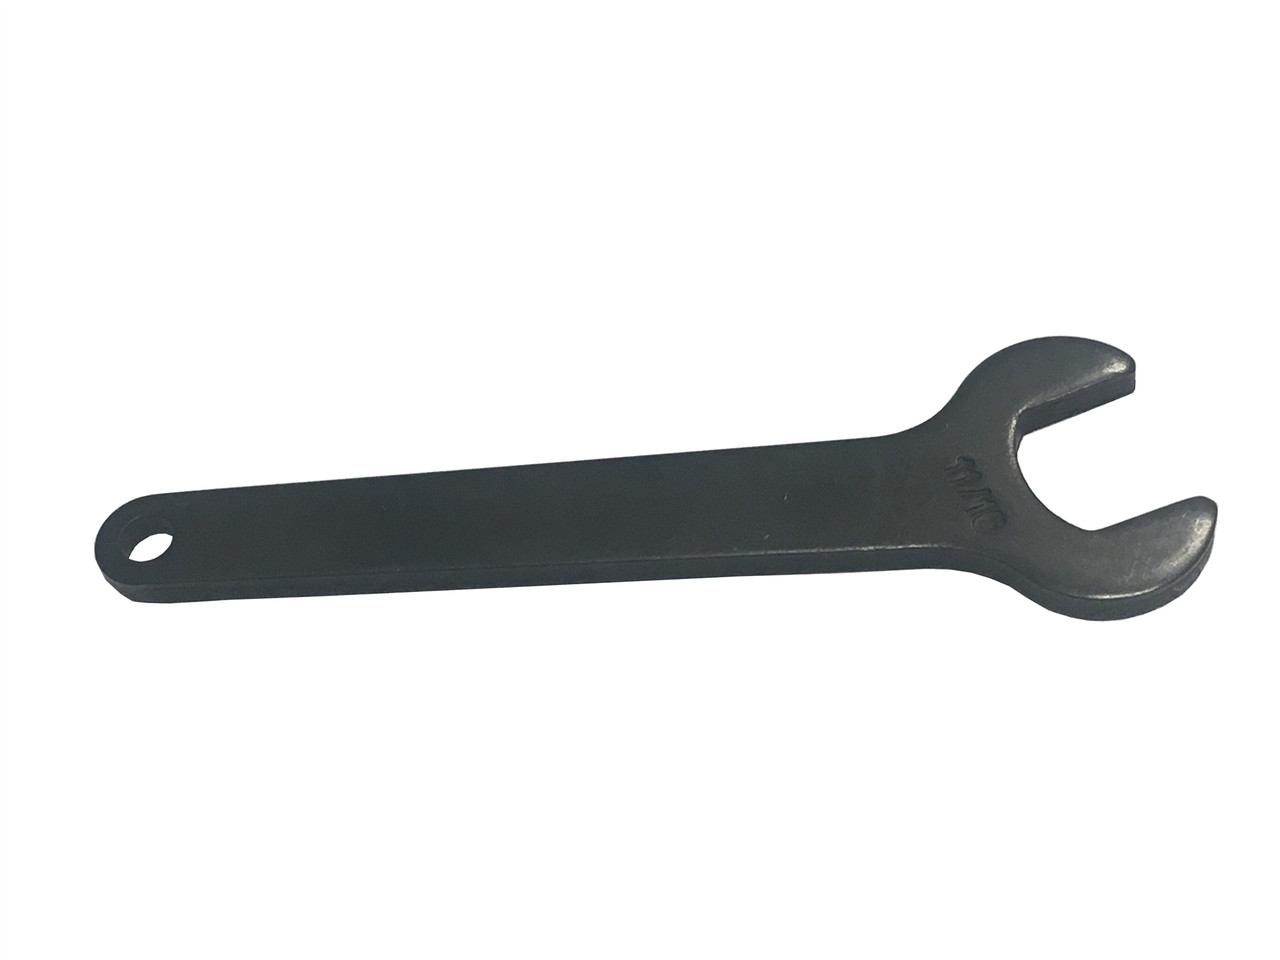 Open End Wrench Set x11 Black+Decker